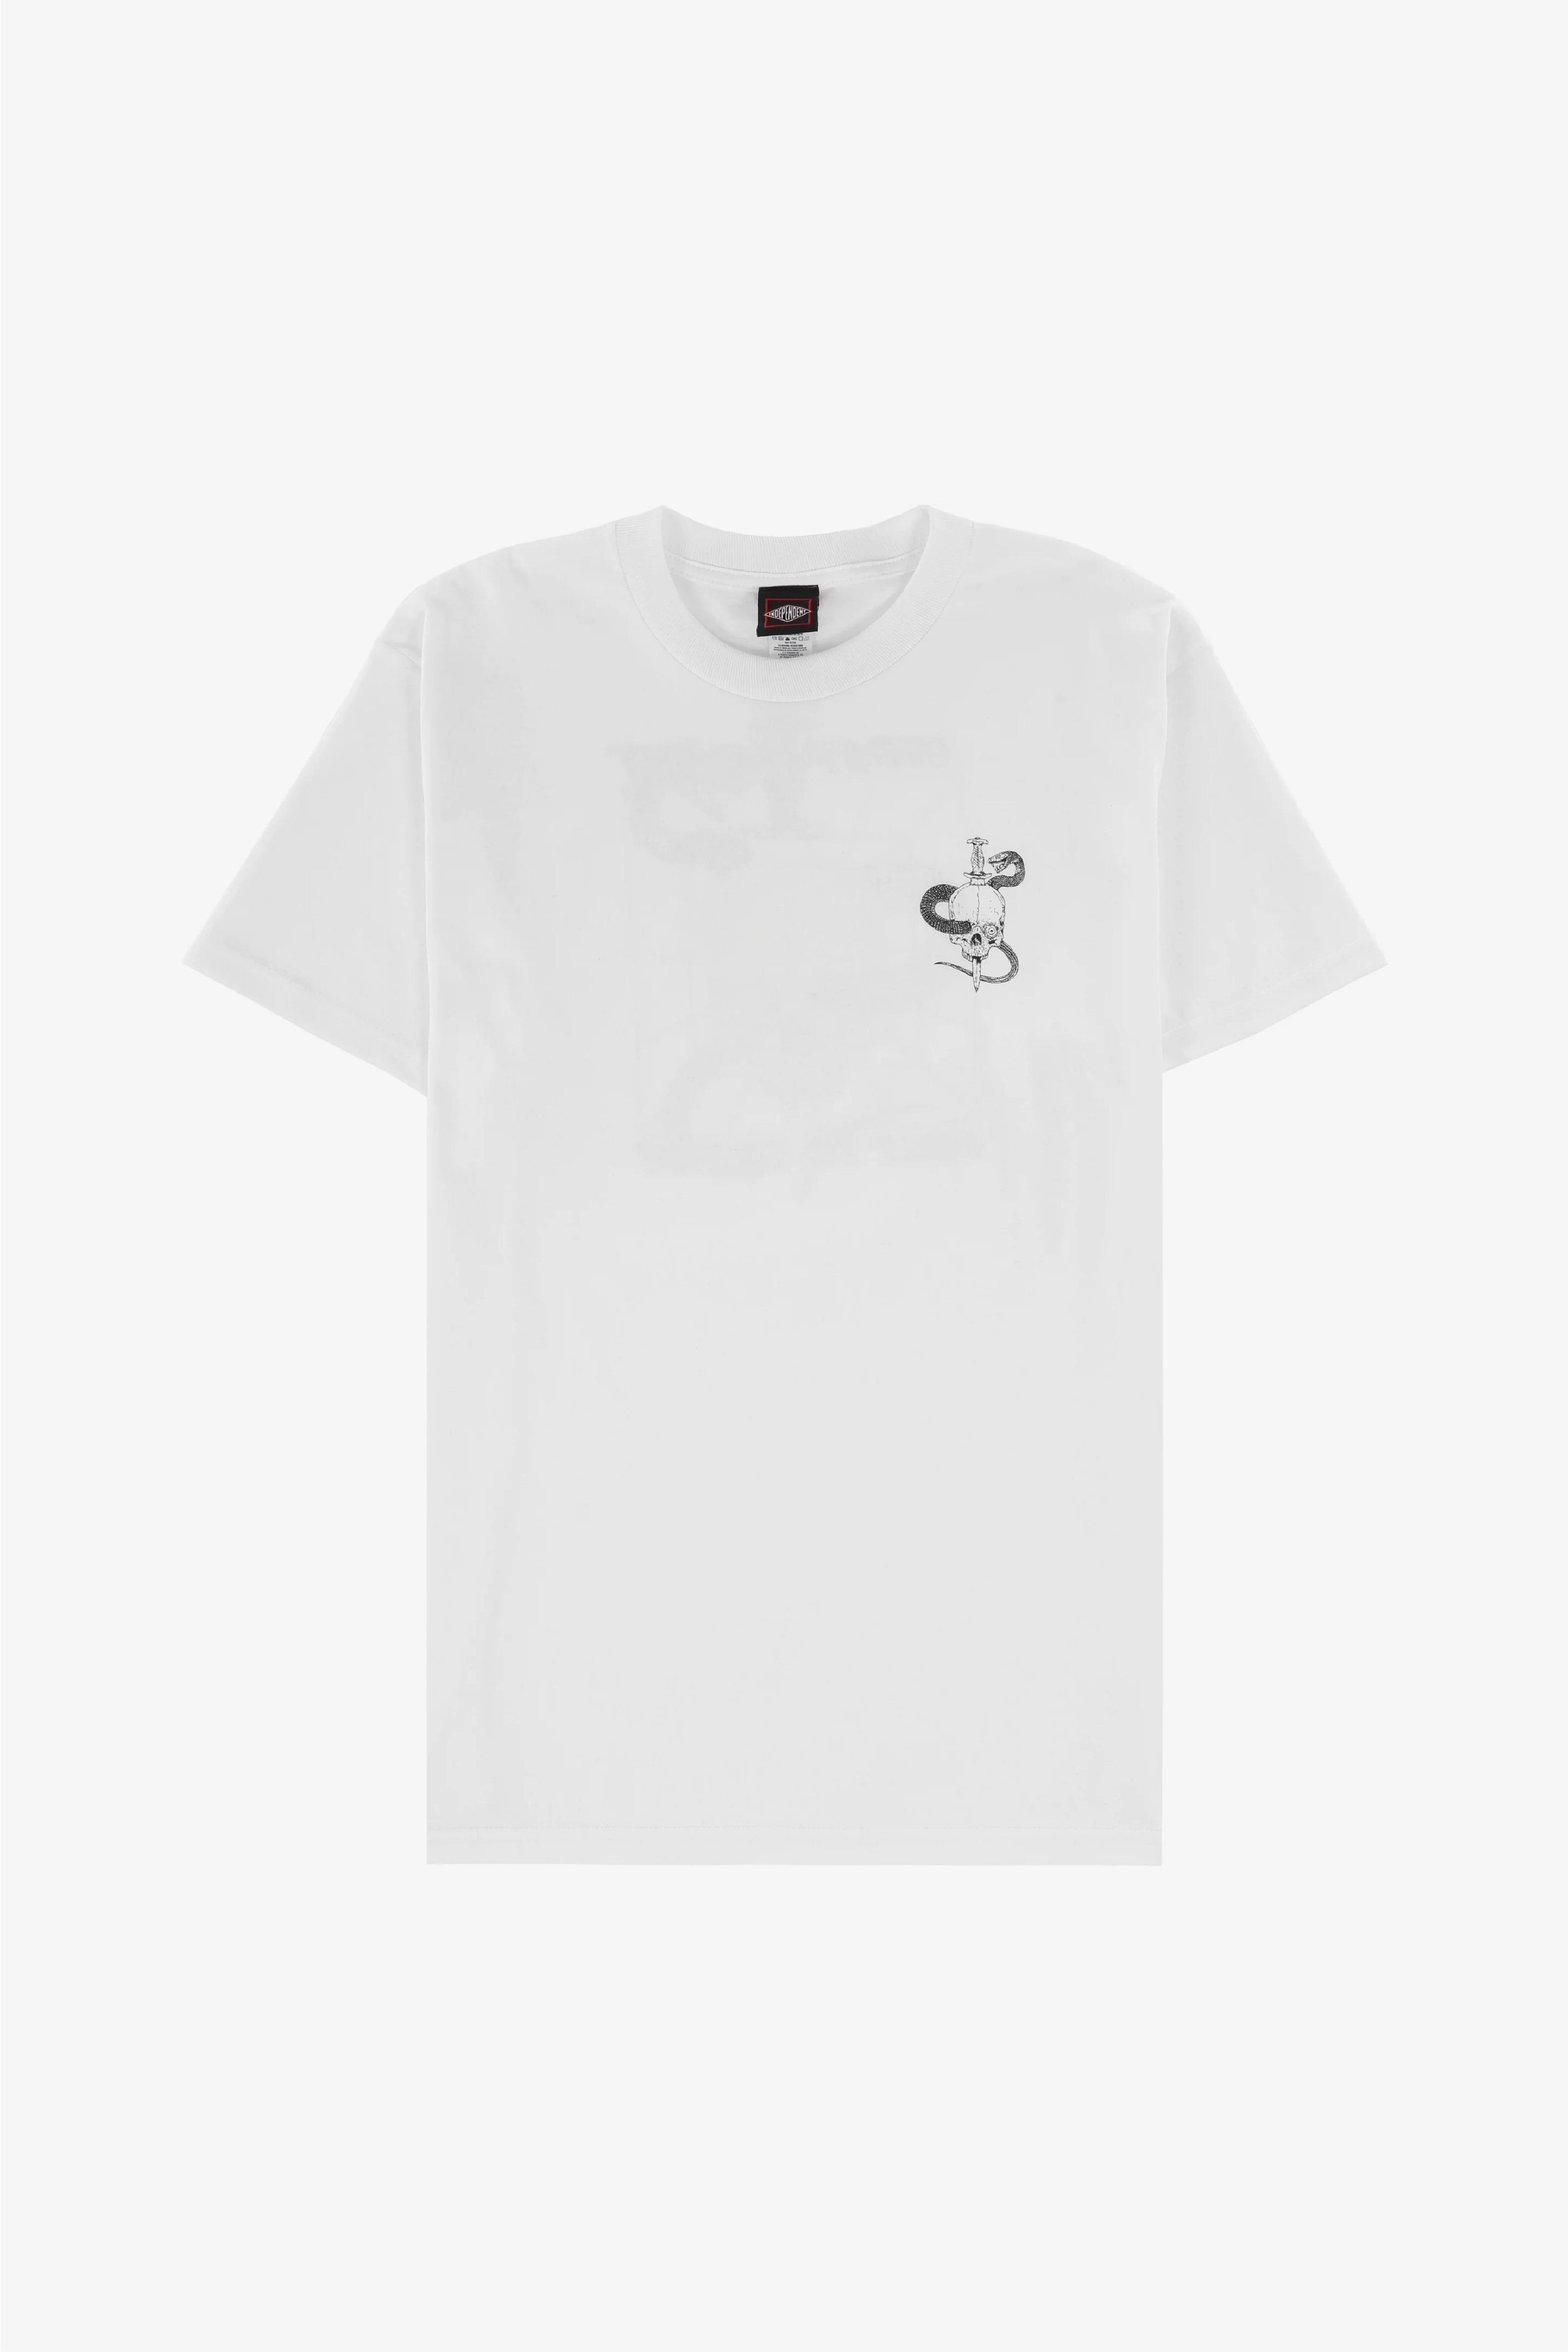 Selectshop FRAME - INDEPENDENT Relic Tee T-Shirts Dubai